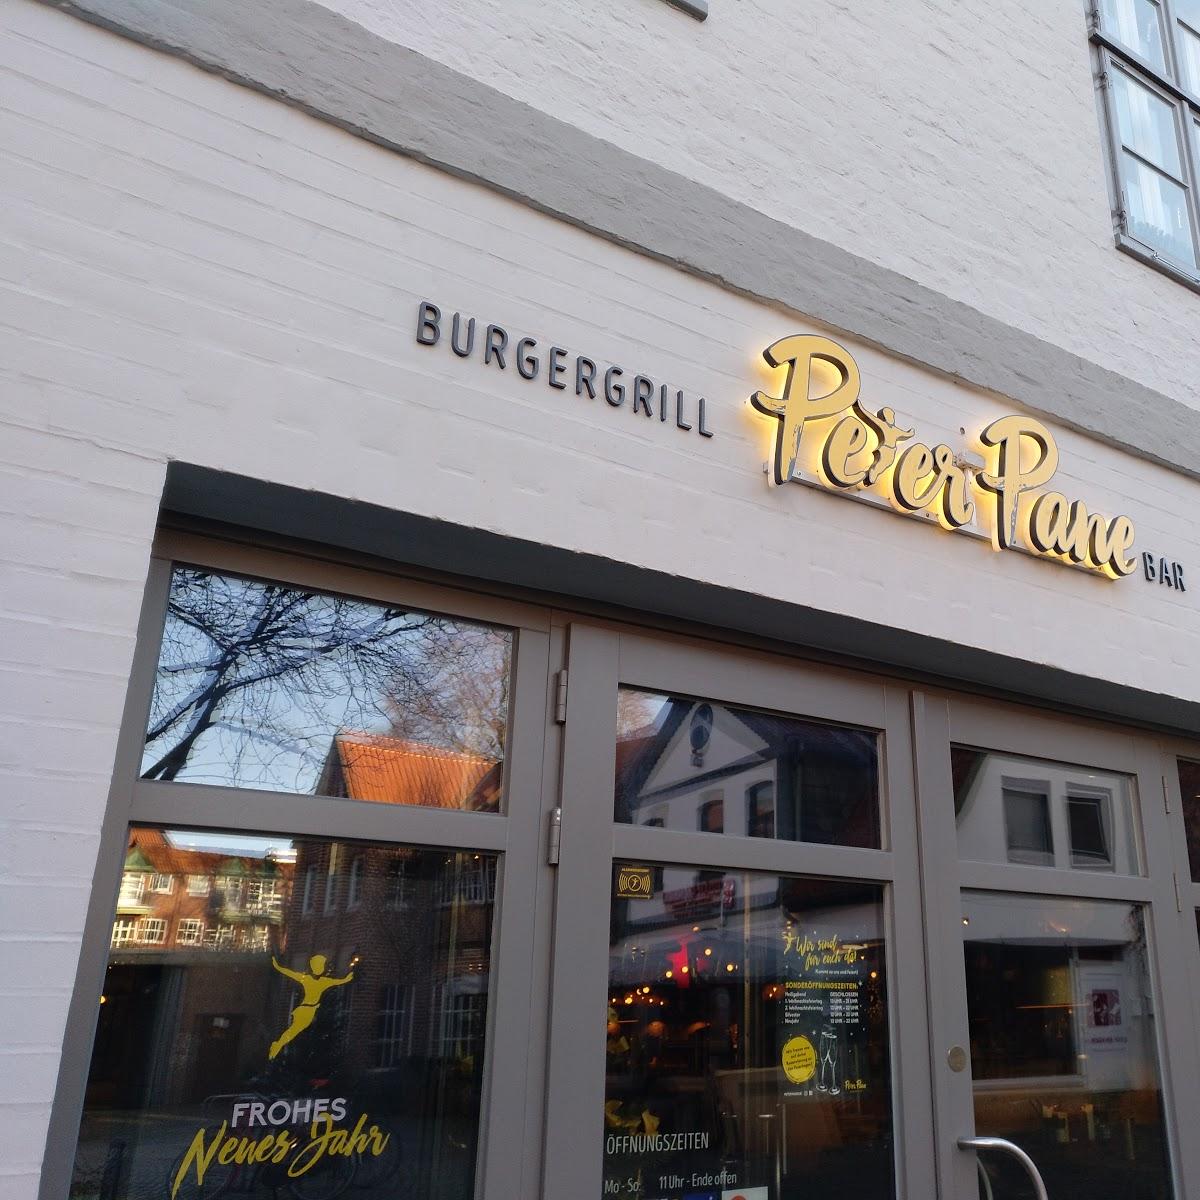 Restaurant "PETER PANE  Burgergrill & Bar" in  Lüneburg